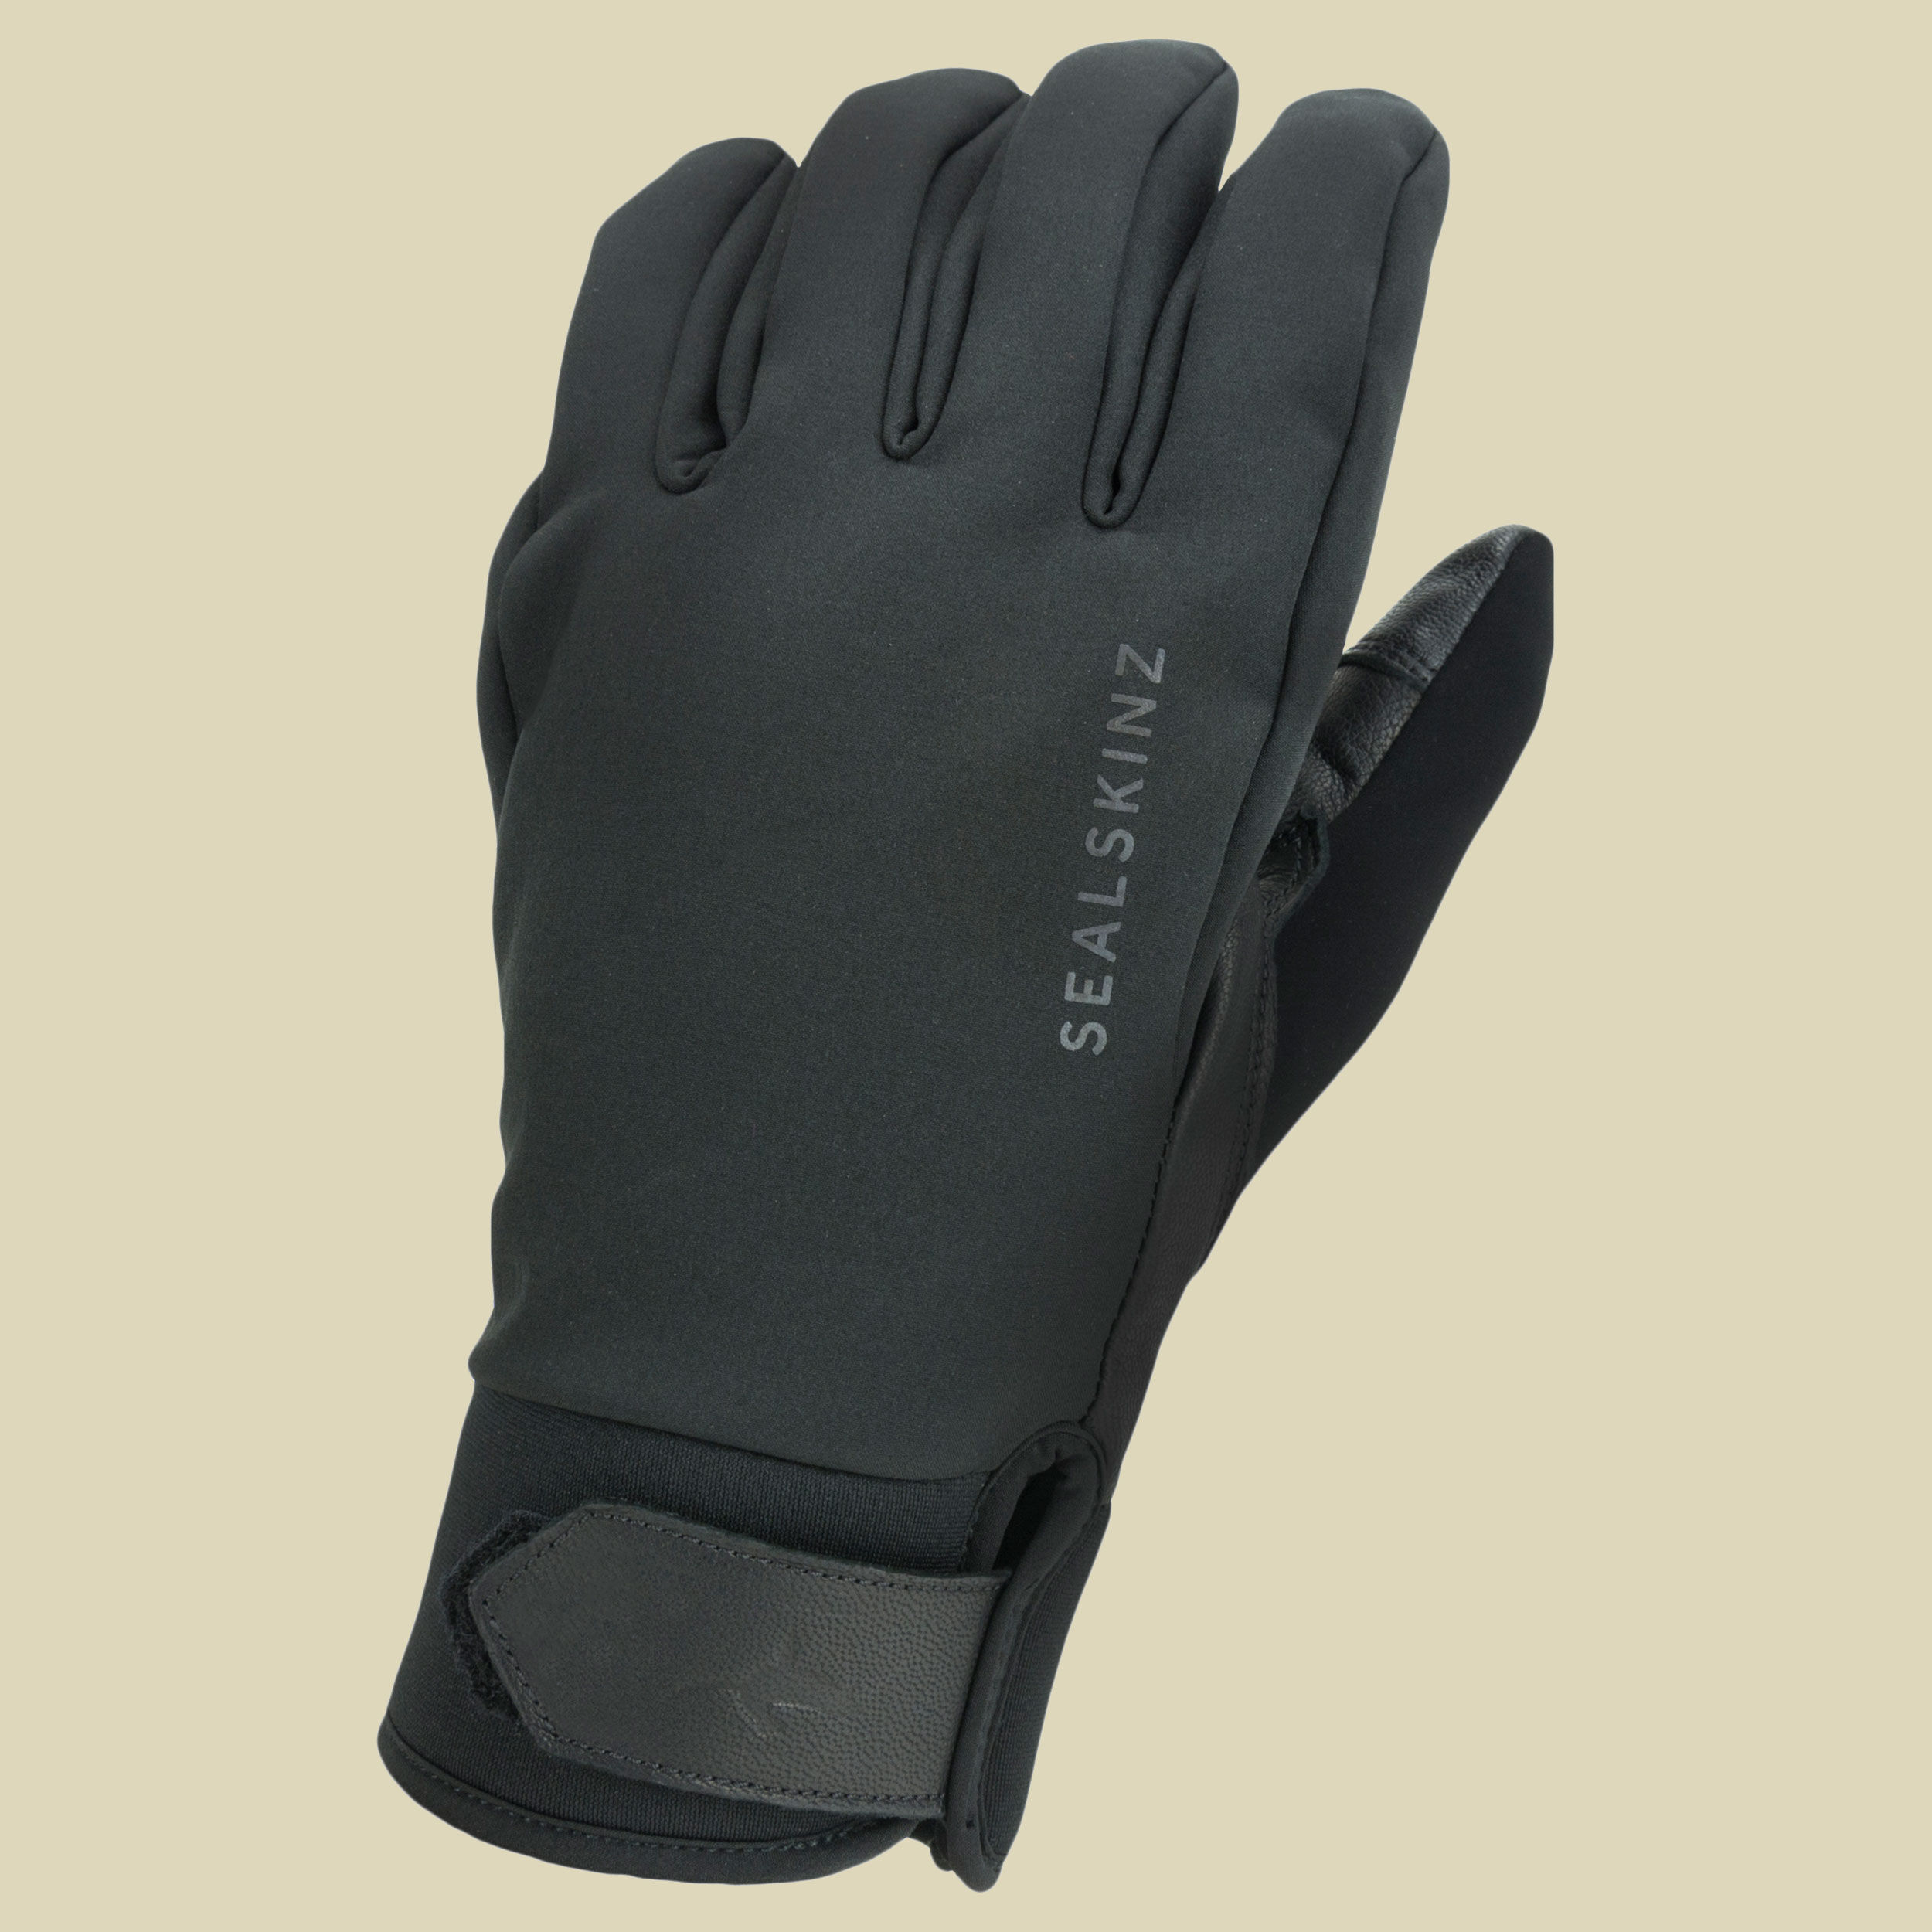 SealSkinz Waterproof All Weather Insulated Glove Women Größe L Farbe black